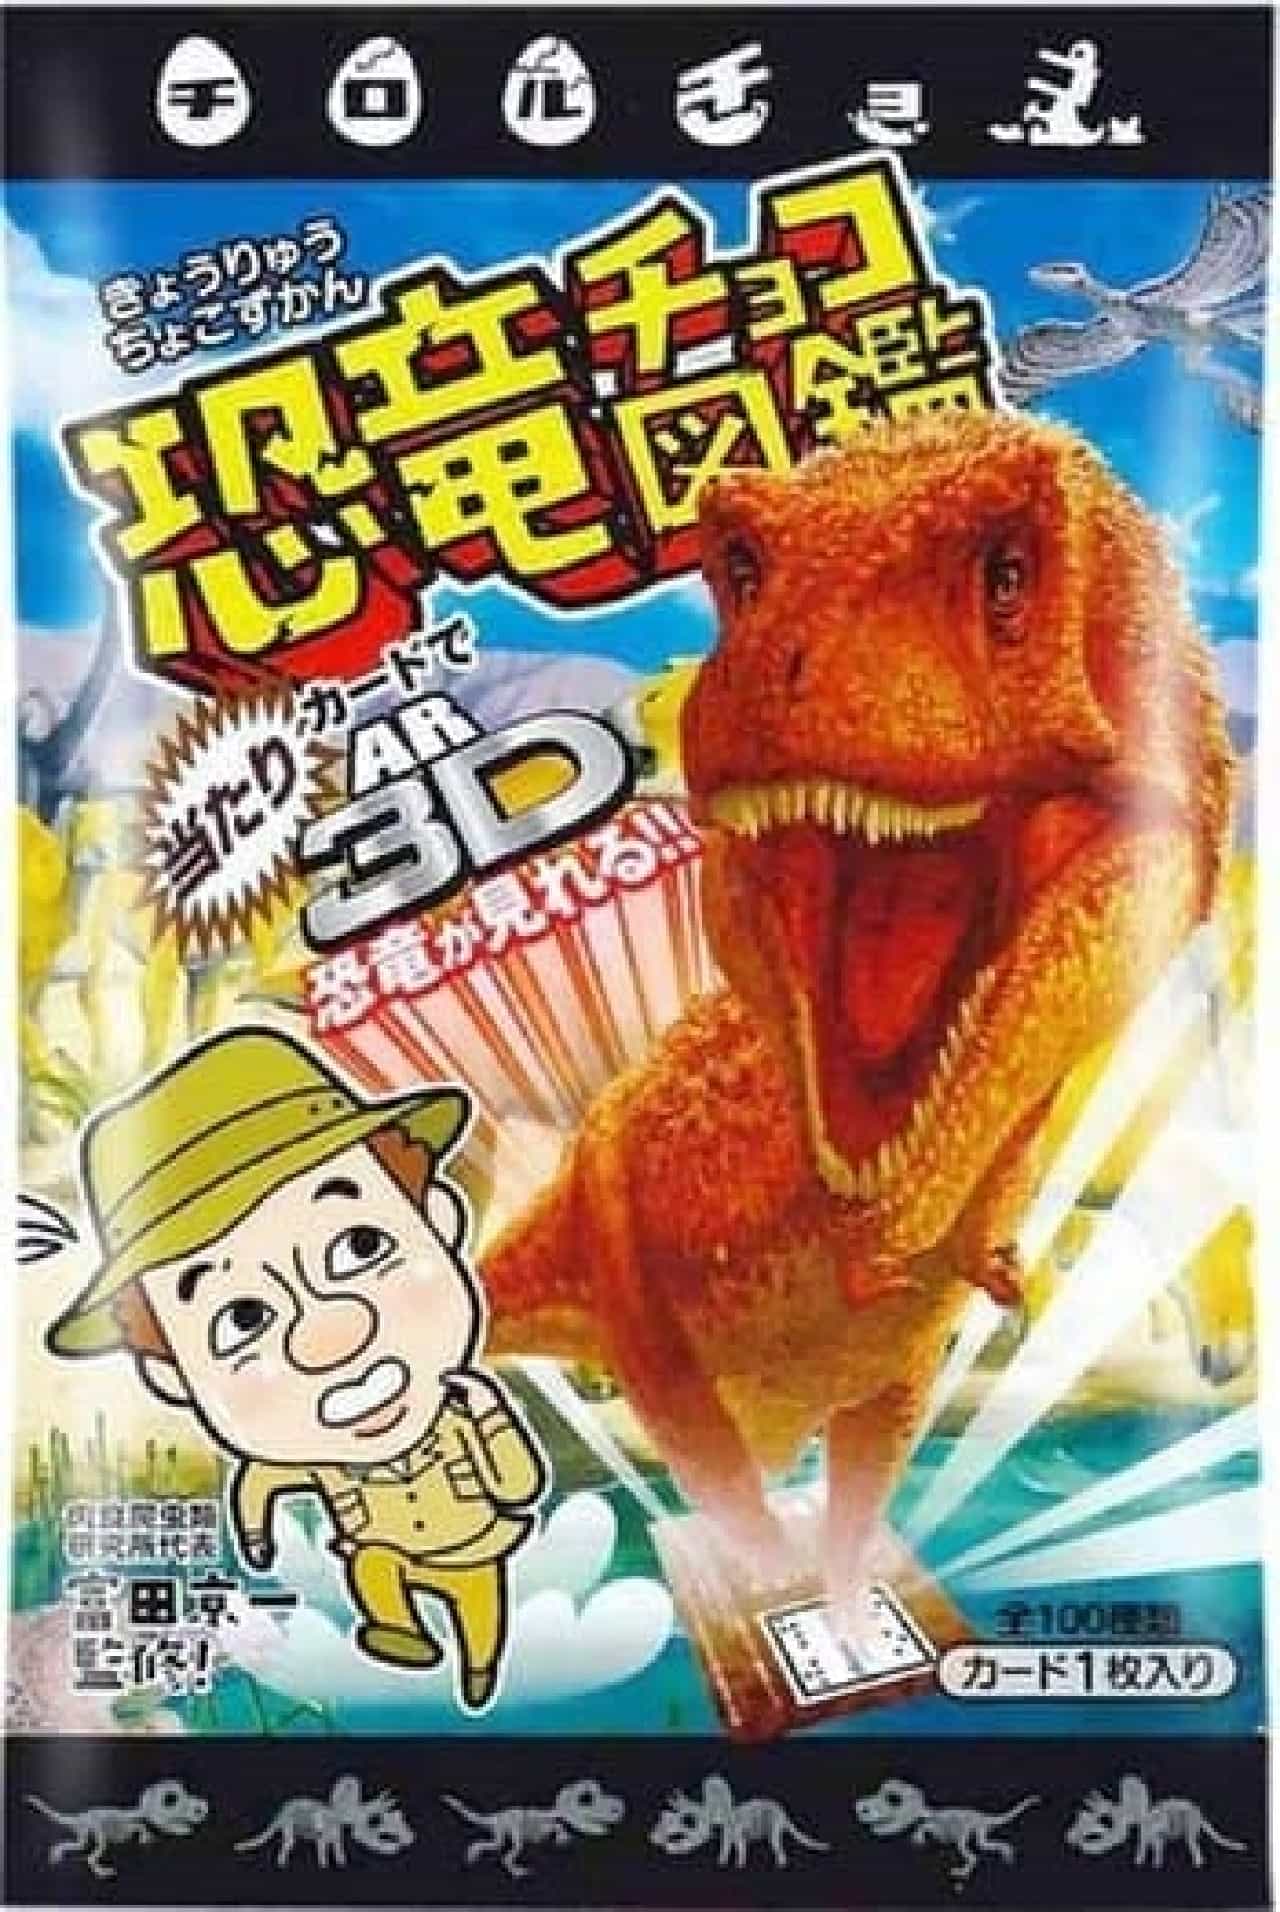 "Dinosaur chocolate picture book"